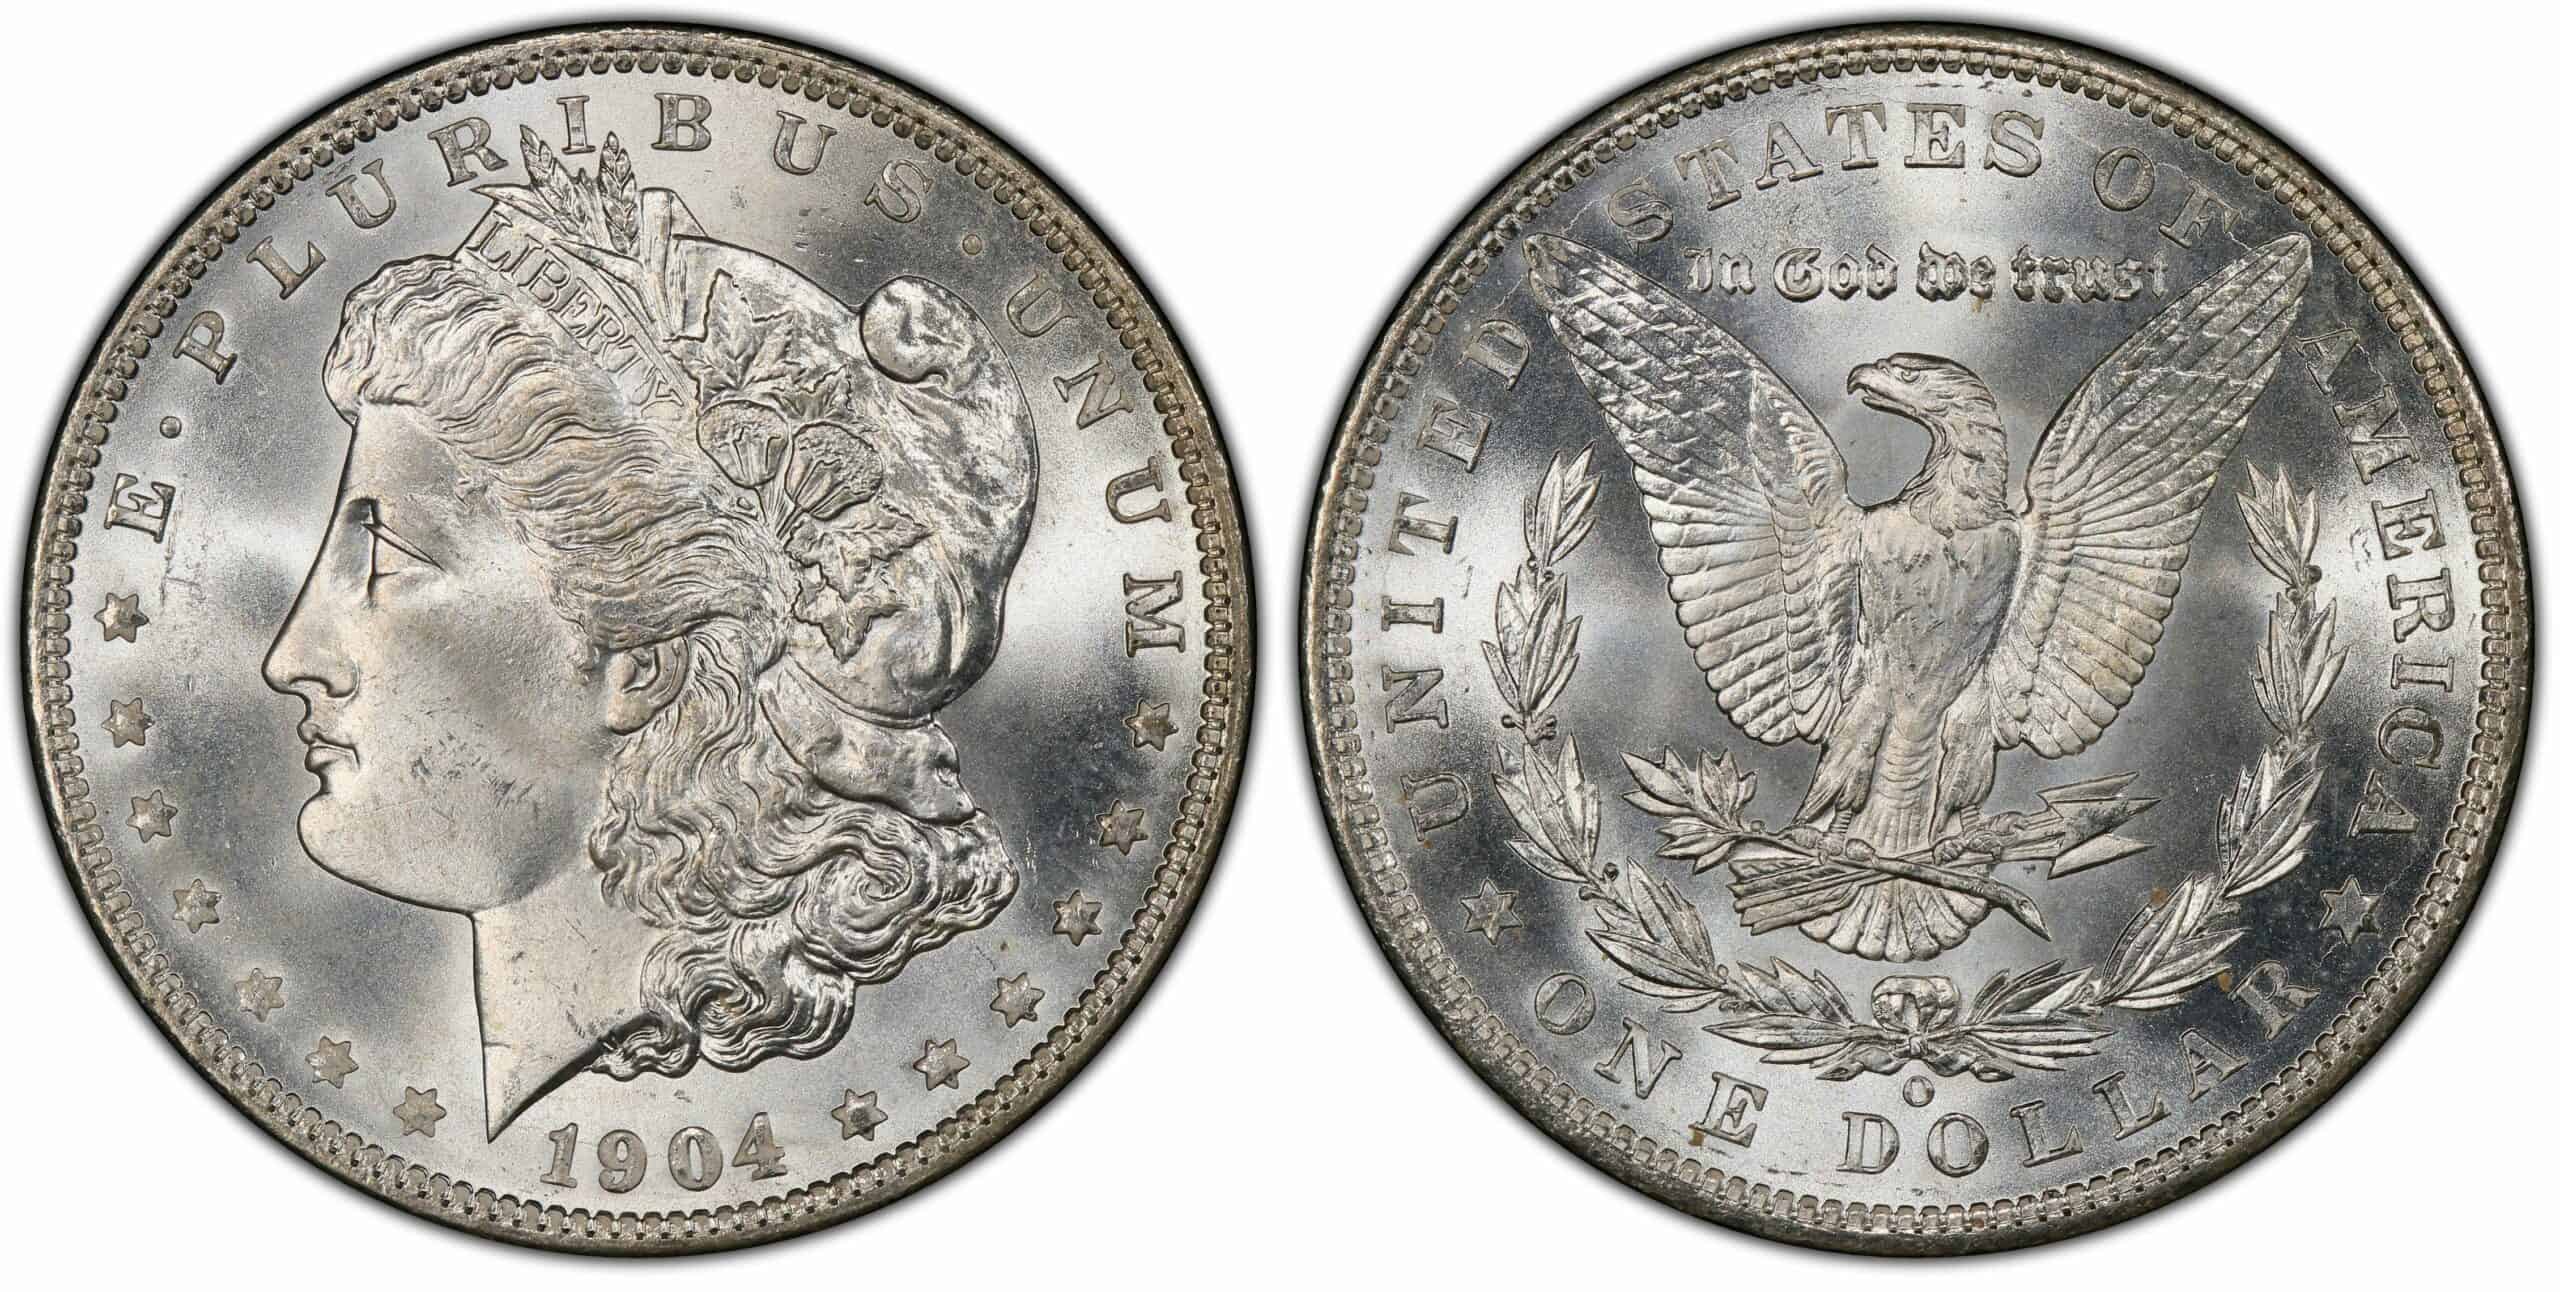 1904 Silver Dollar Value (Rare Errors, “O”, “S” & No Mint Marks)